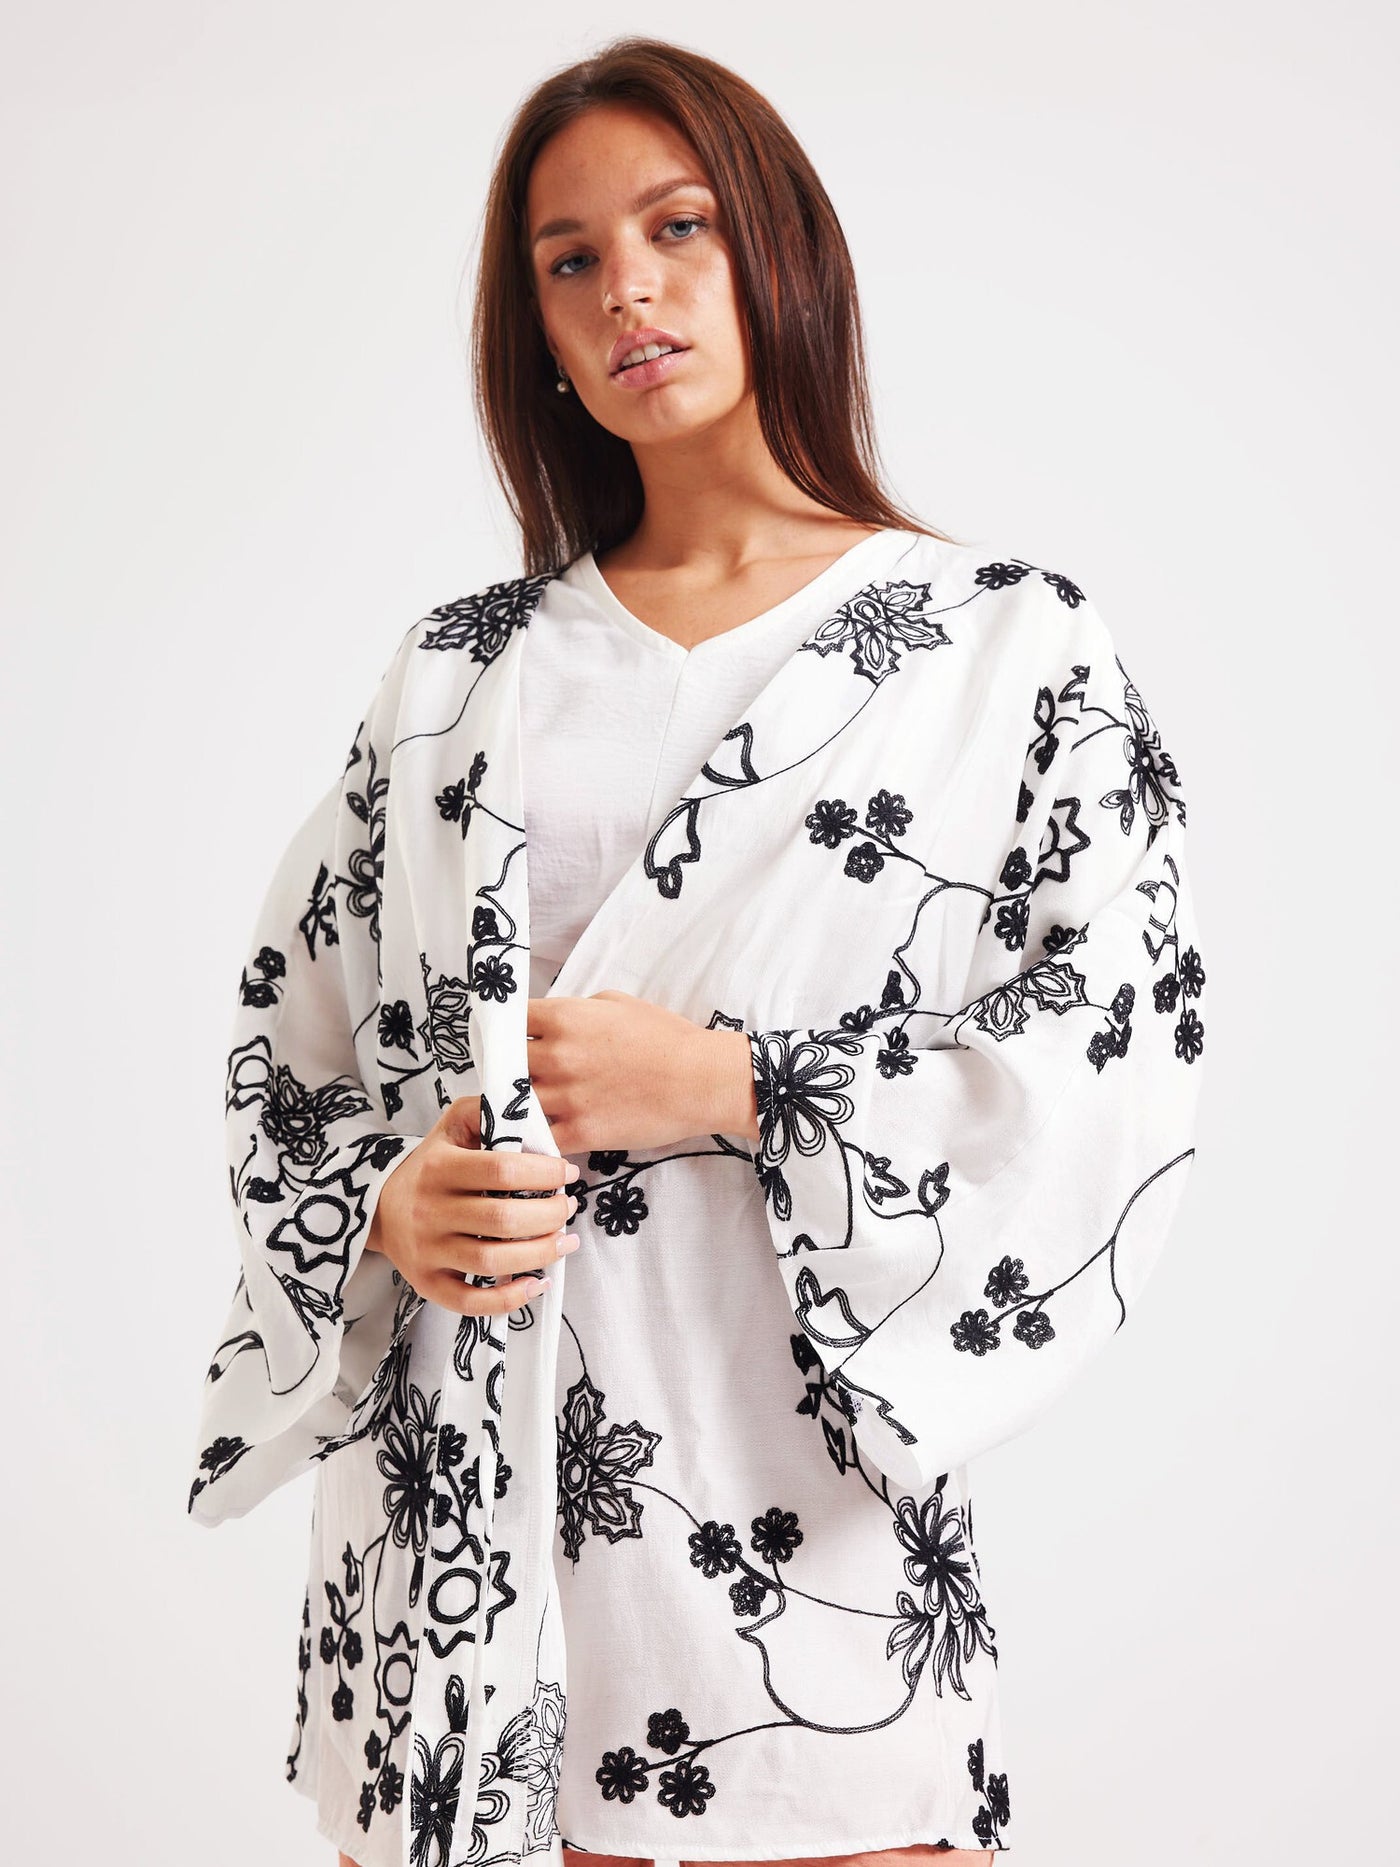 Kimono - Printed - With Lace